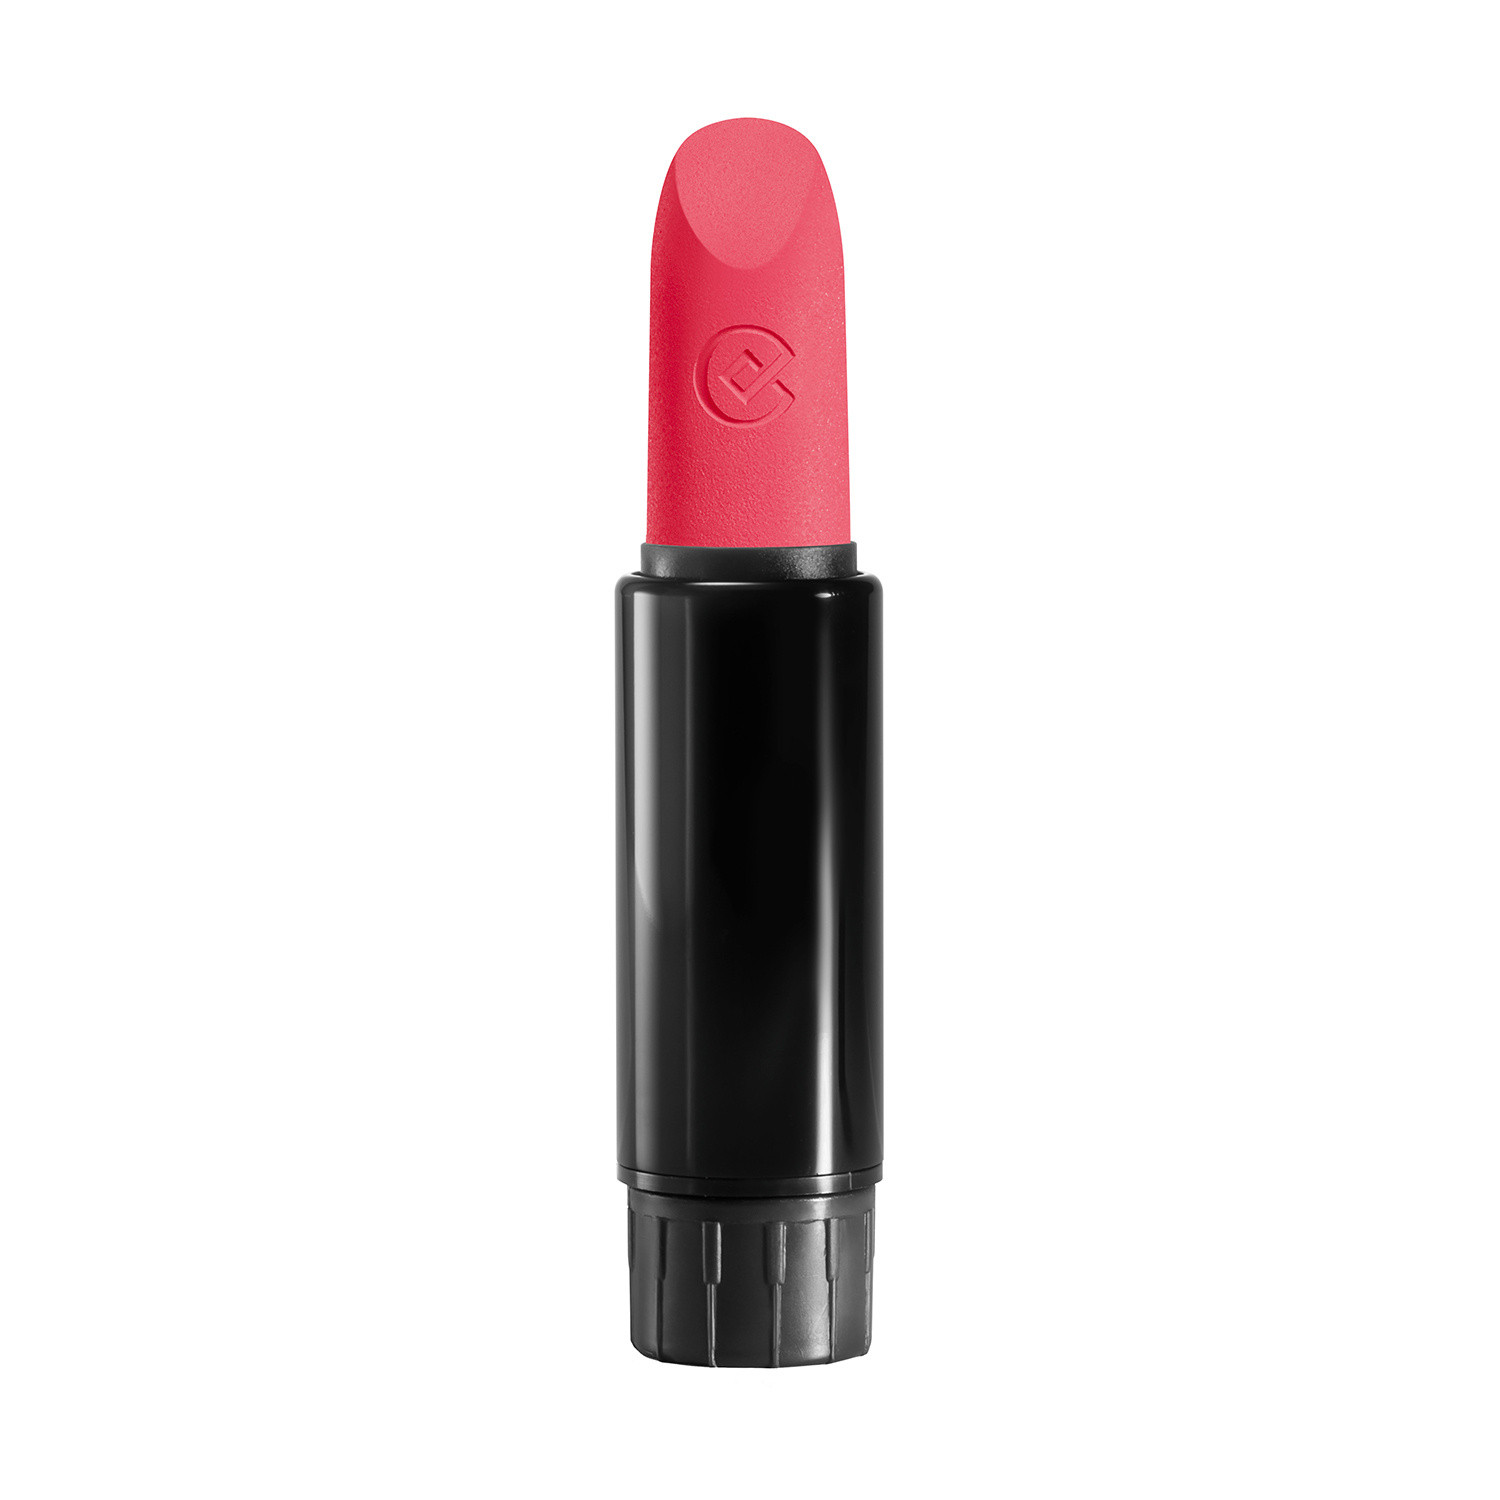 Collistar - Pure matte lipstick refill - 28 Pink Peach, Orange Fishing, large image number 0